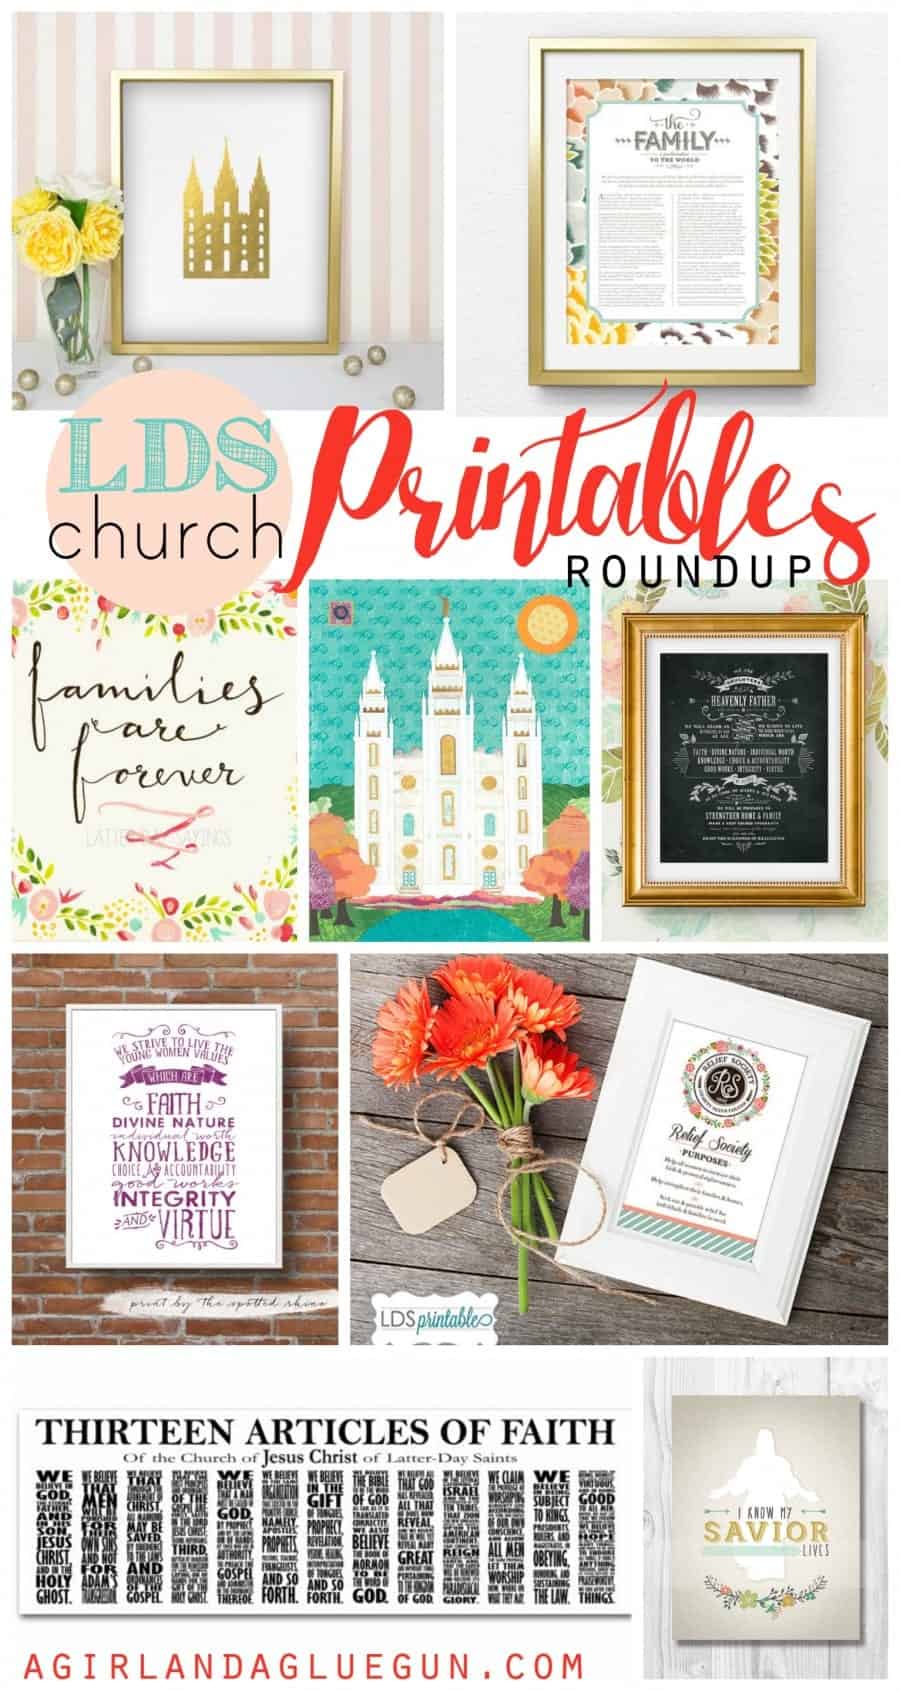 lds church printables roundup